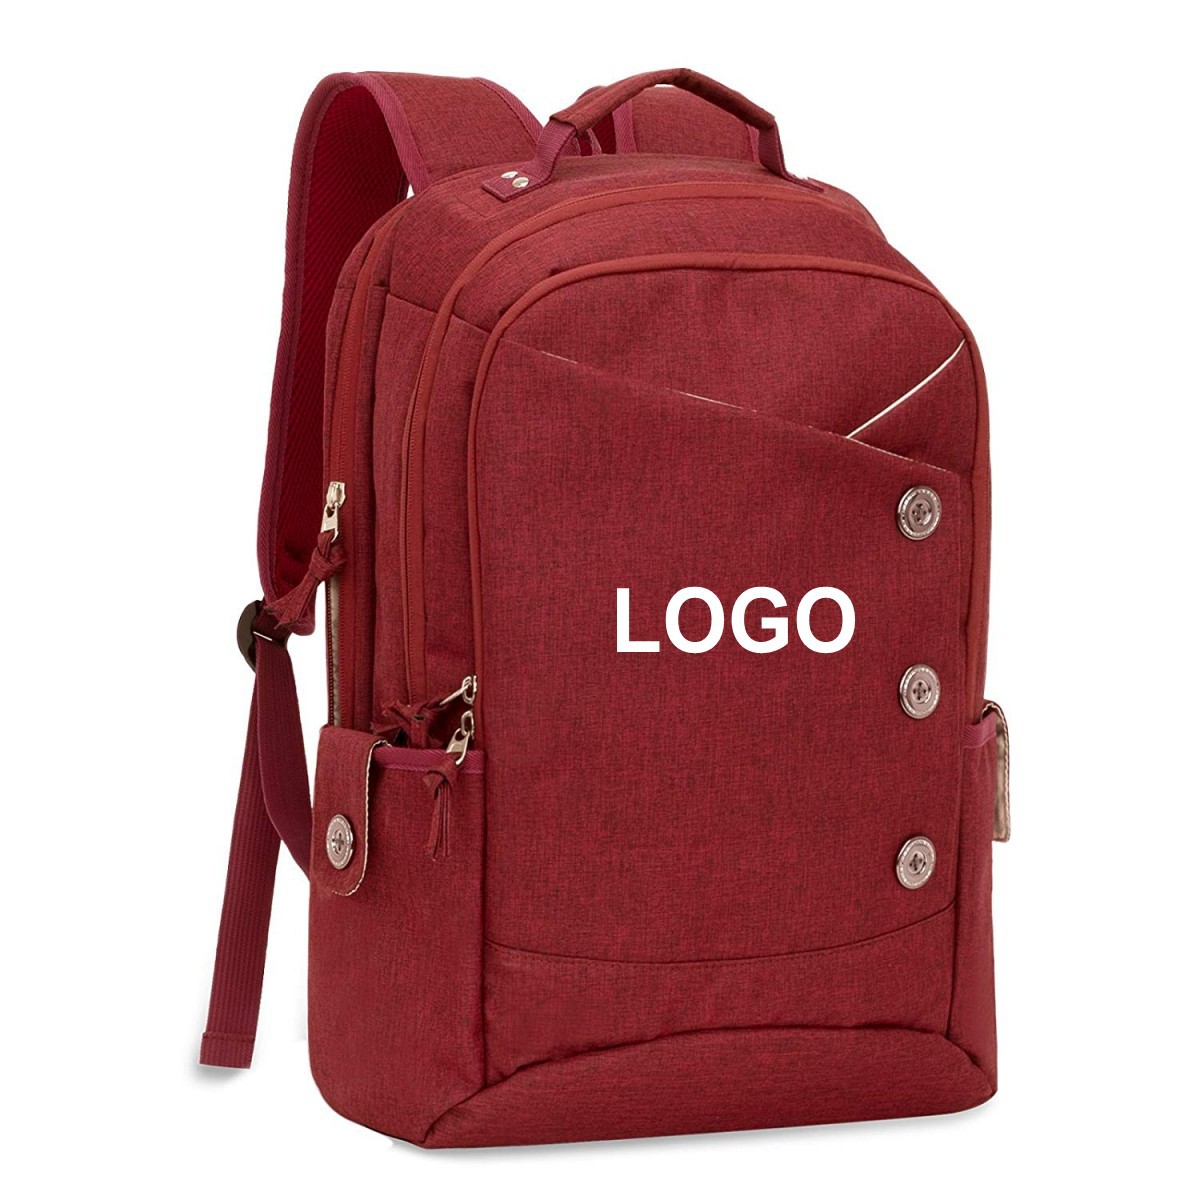 2020 Laptop Bag For Women 15.6 inch for Travel Work Laptop Bag Women